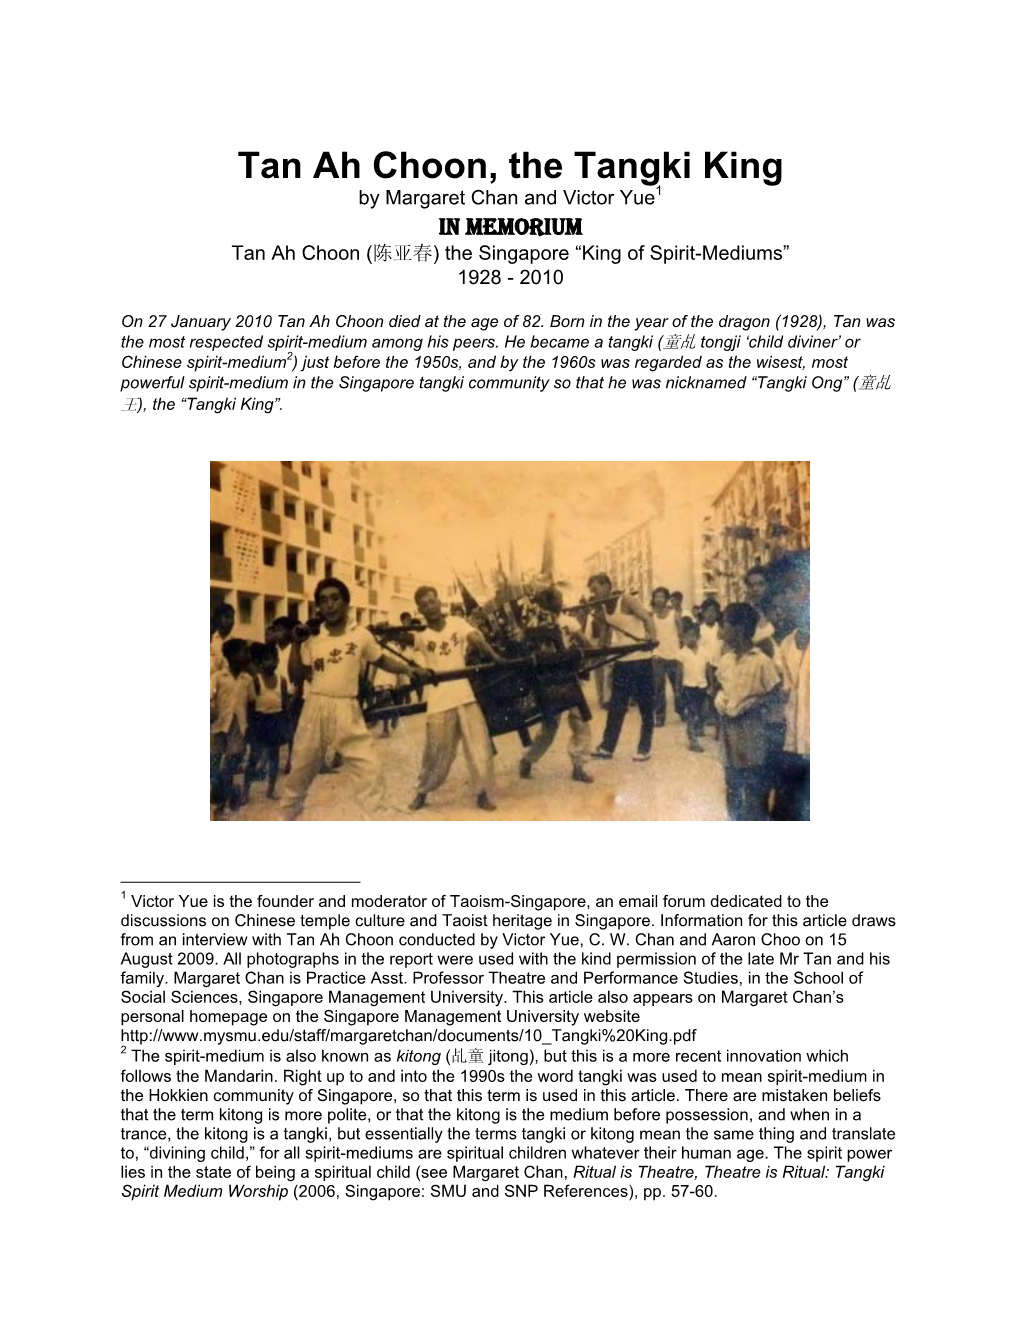 Tan Ah Choon, the Tangki King by Margaret Chan and Victor Yue1 in MEMORIUM Tan Ah Choon (陈亚春) the Singapore “King of Spirit-Mediums” 1928 - 2010